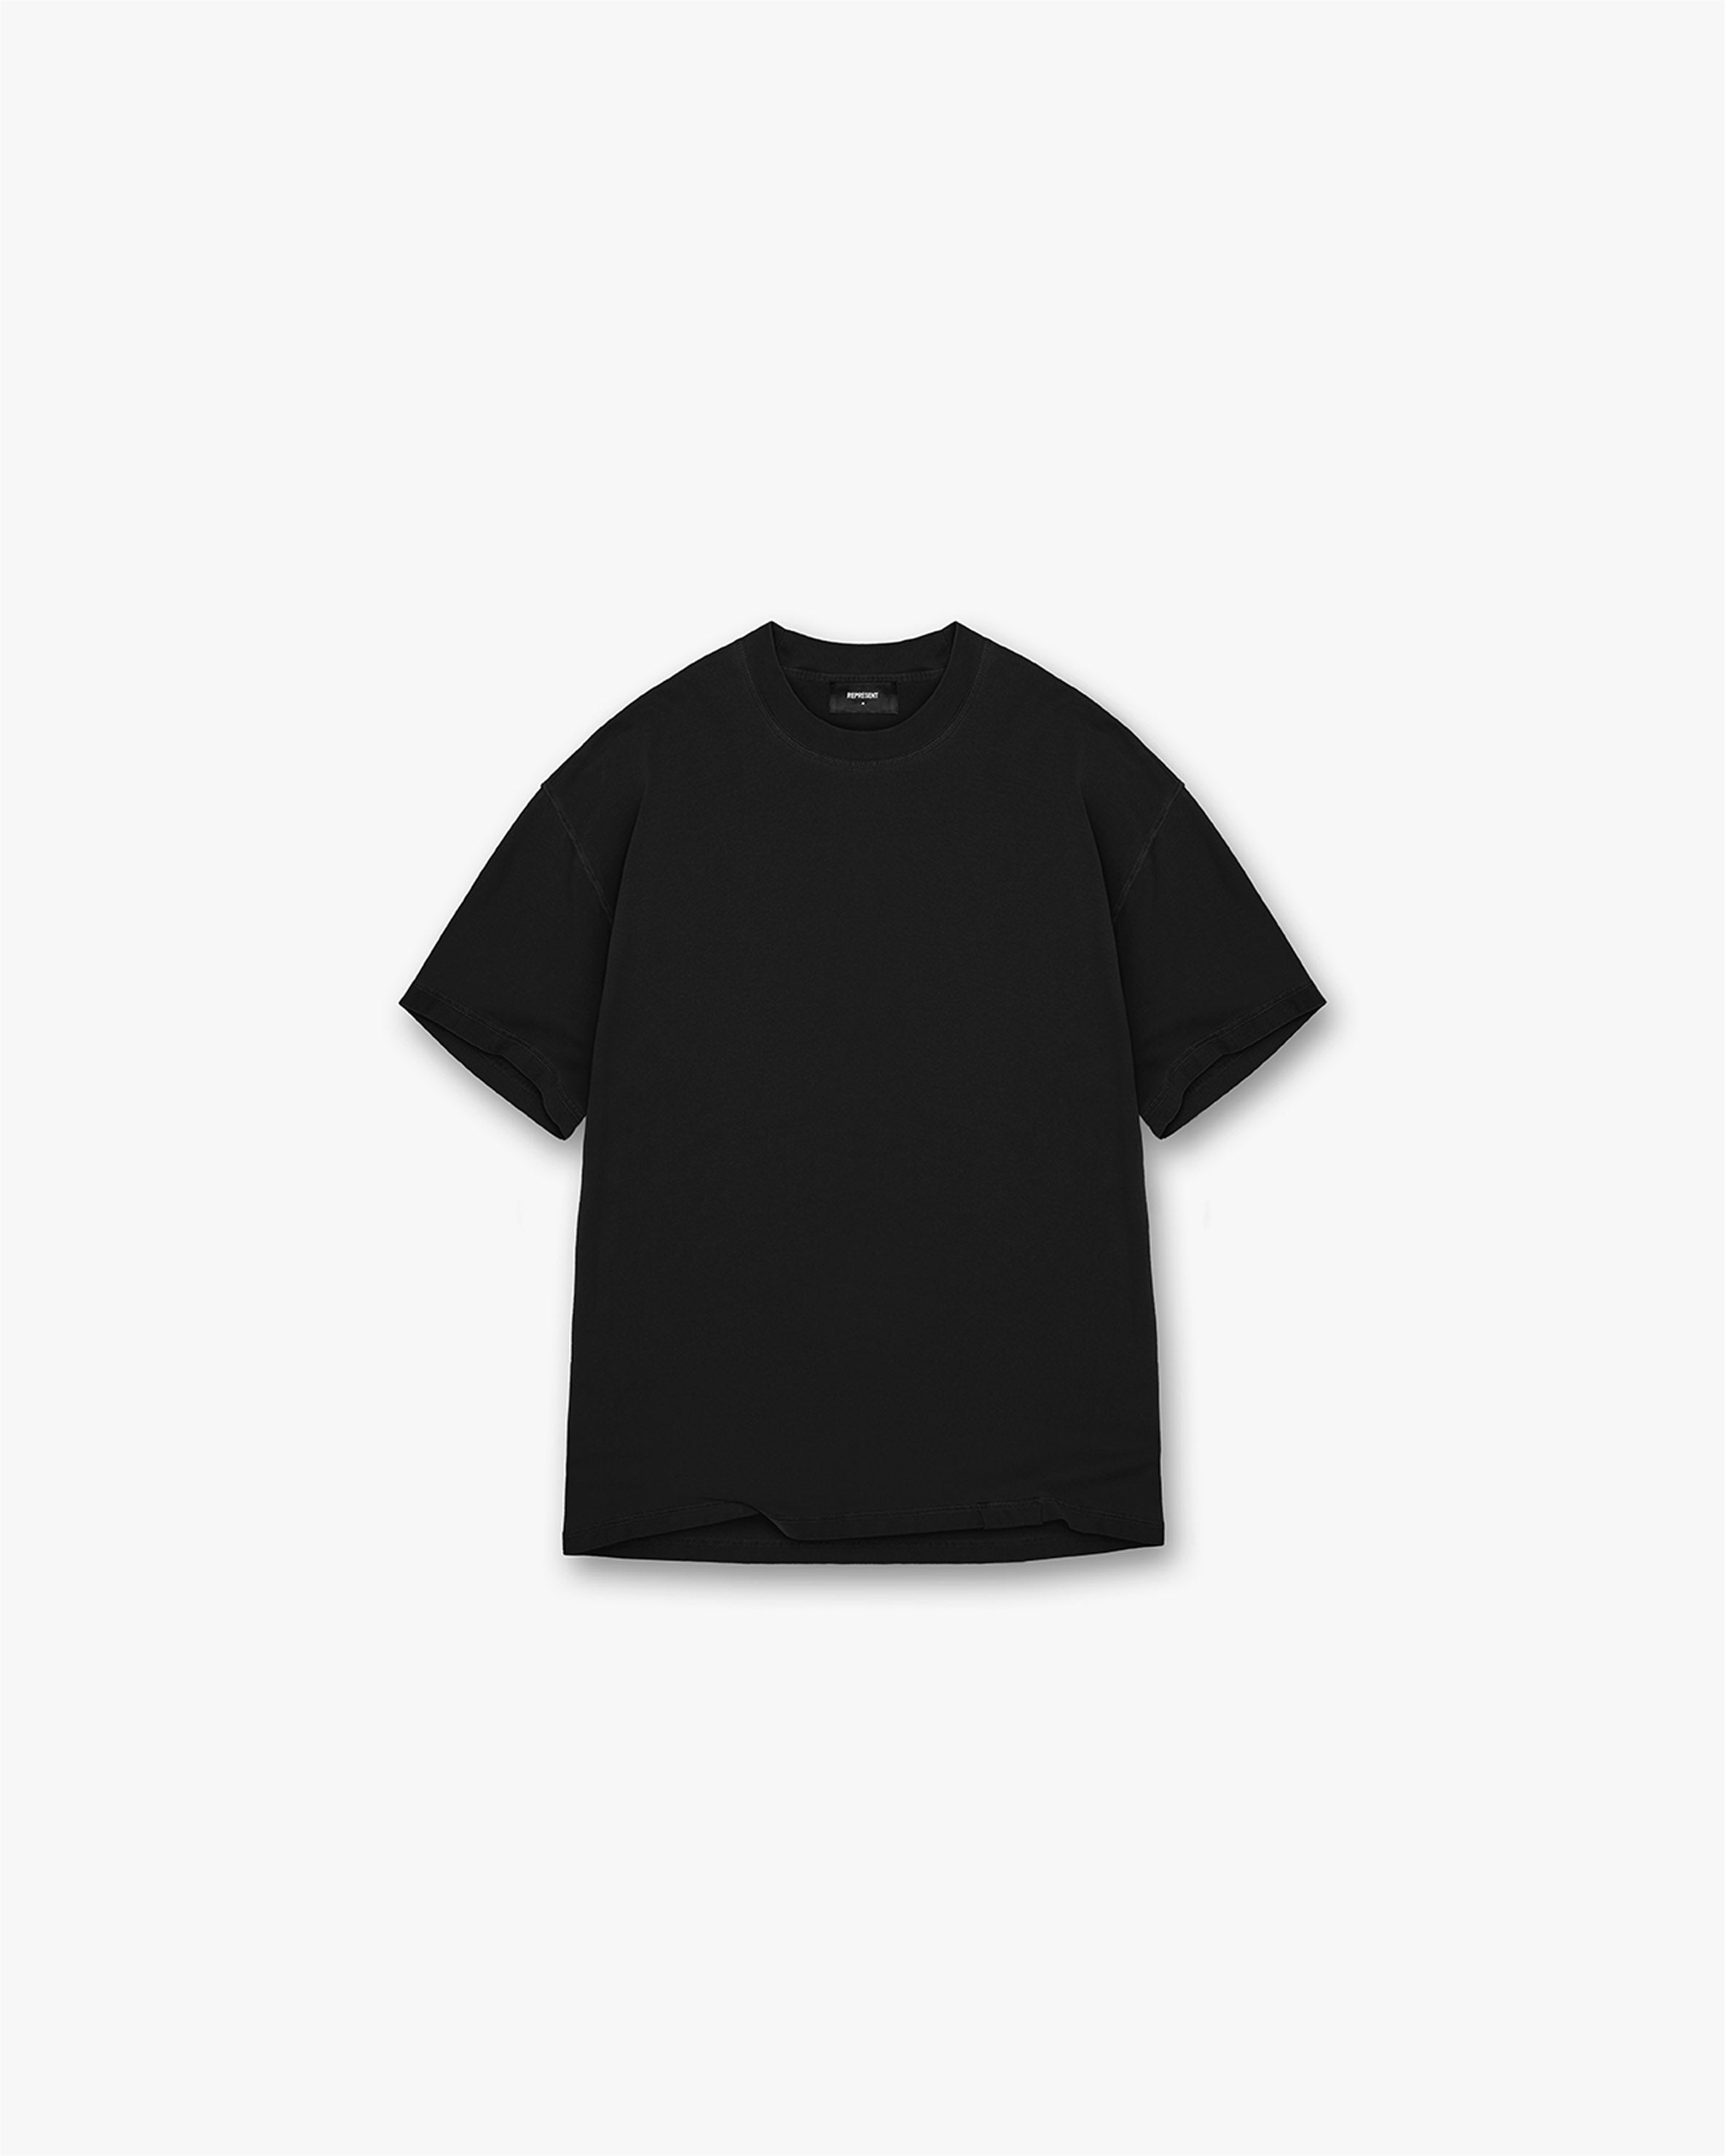 Initial T-Shirt - Jet Black